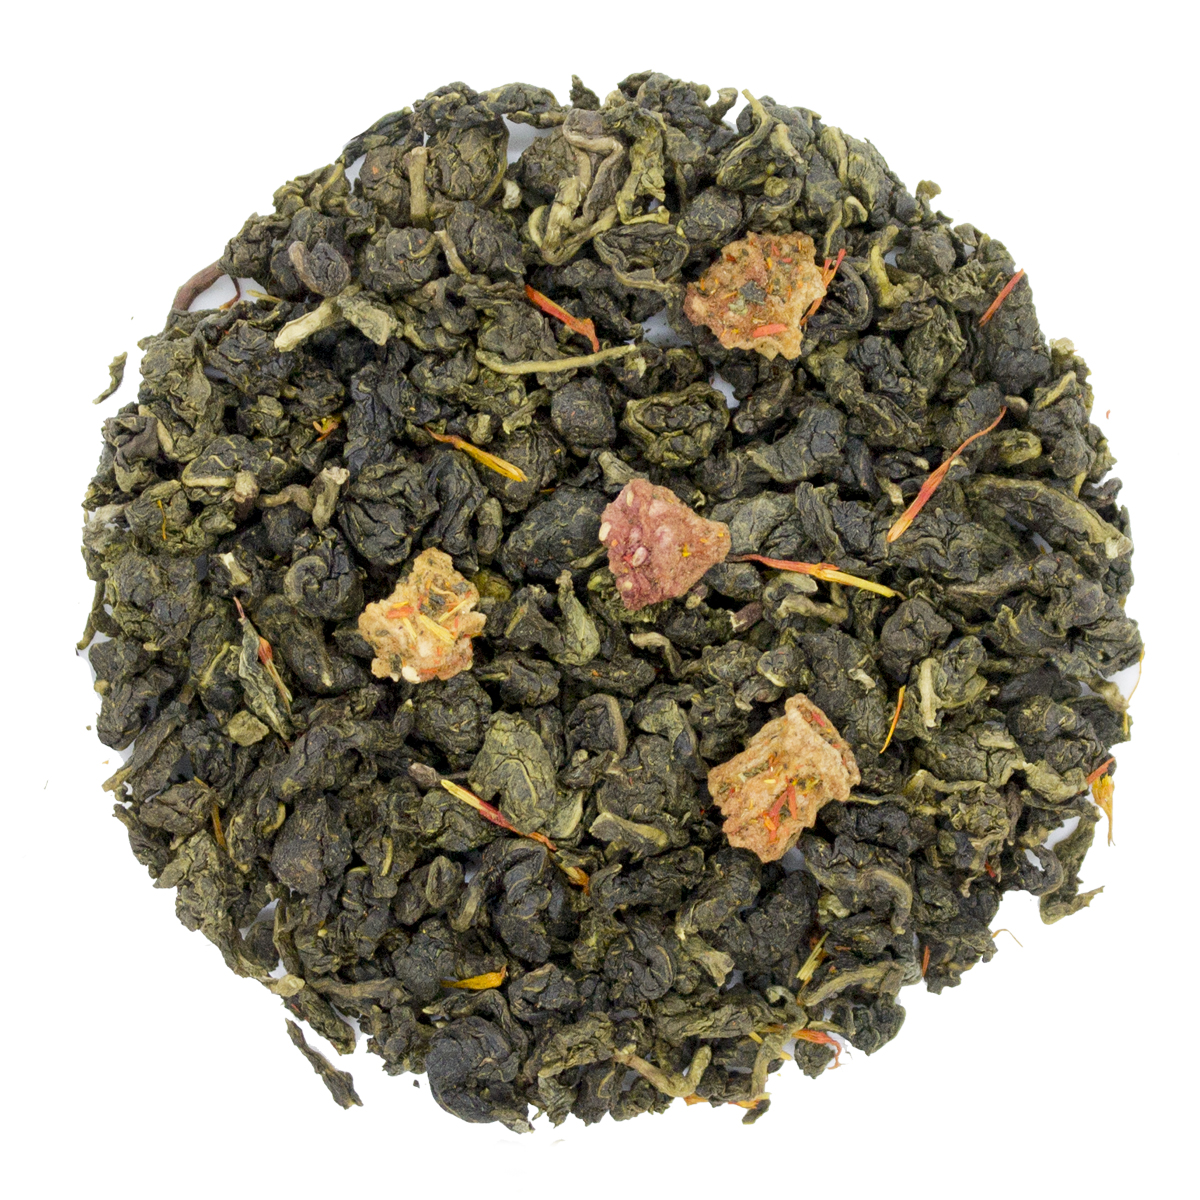 Улун «Земляничный». Greenleaf зеленый чай улун османтусами - nag004. Земляничный улун чай и травы. Mute Земляничный улун.